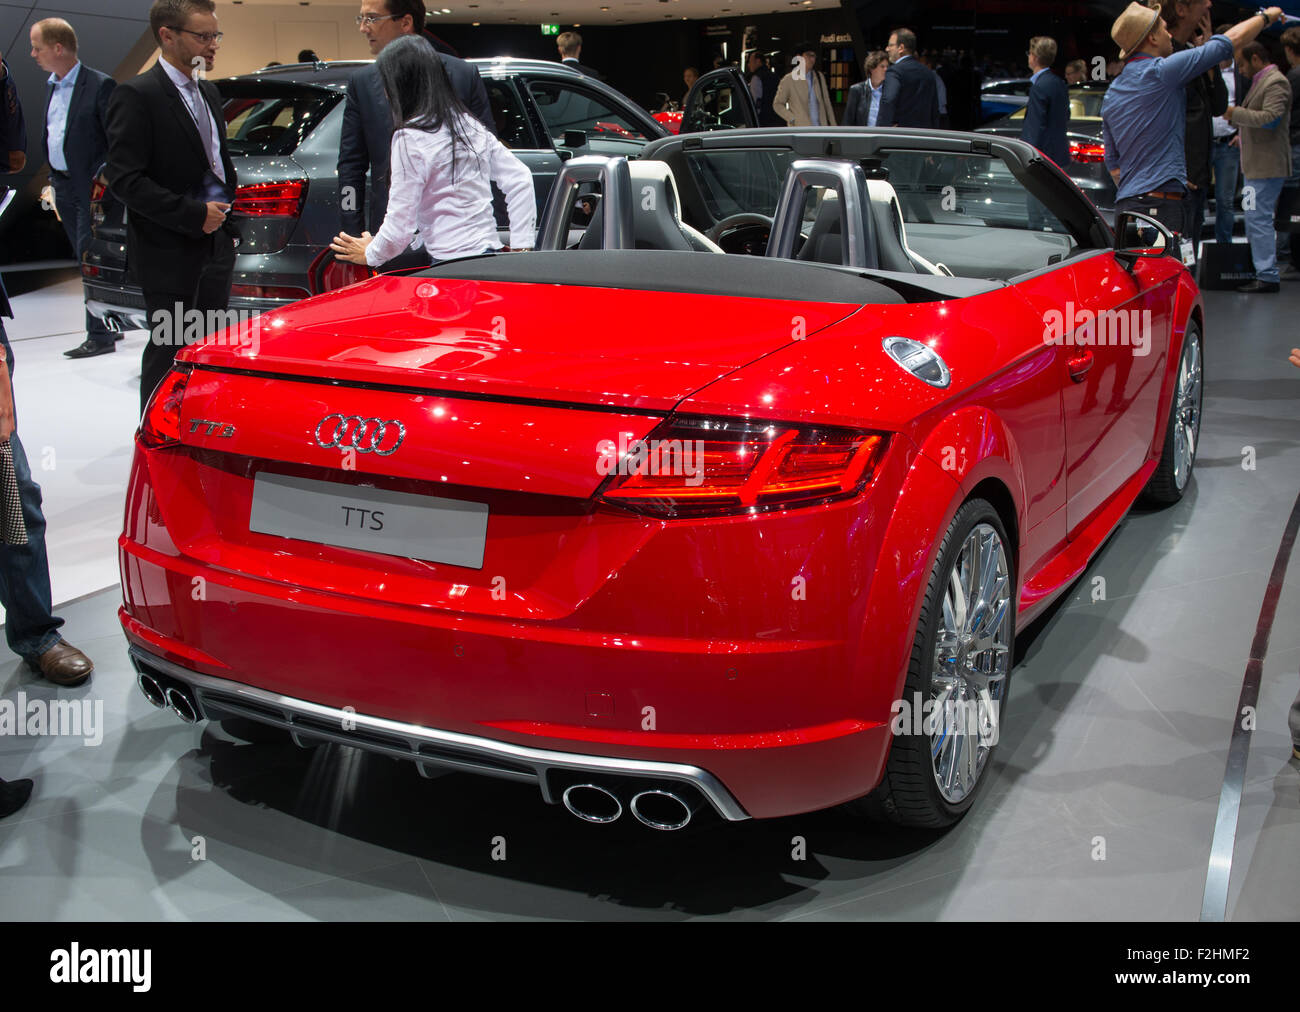 New Model Audi Tt Showroom Stockfotos und -bilder Kaufen - Alamy